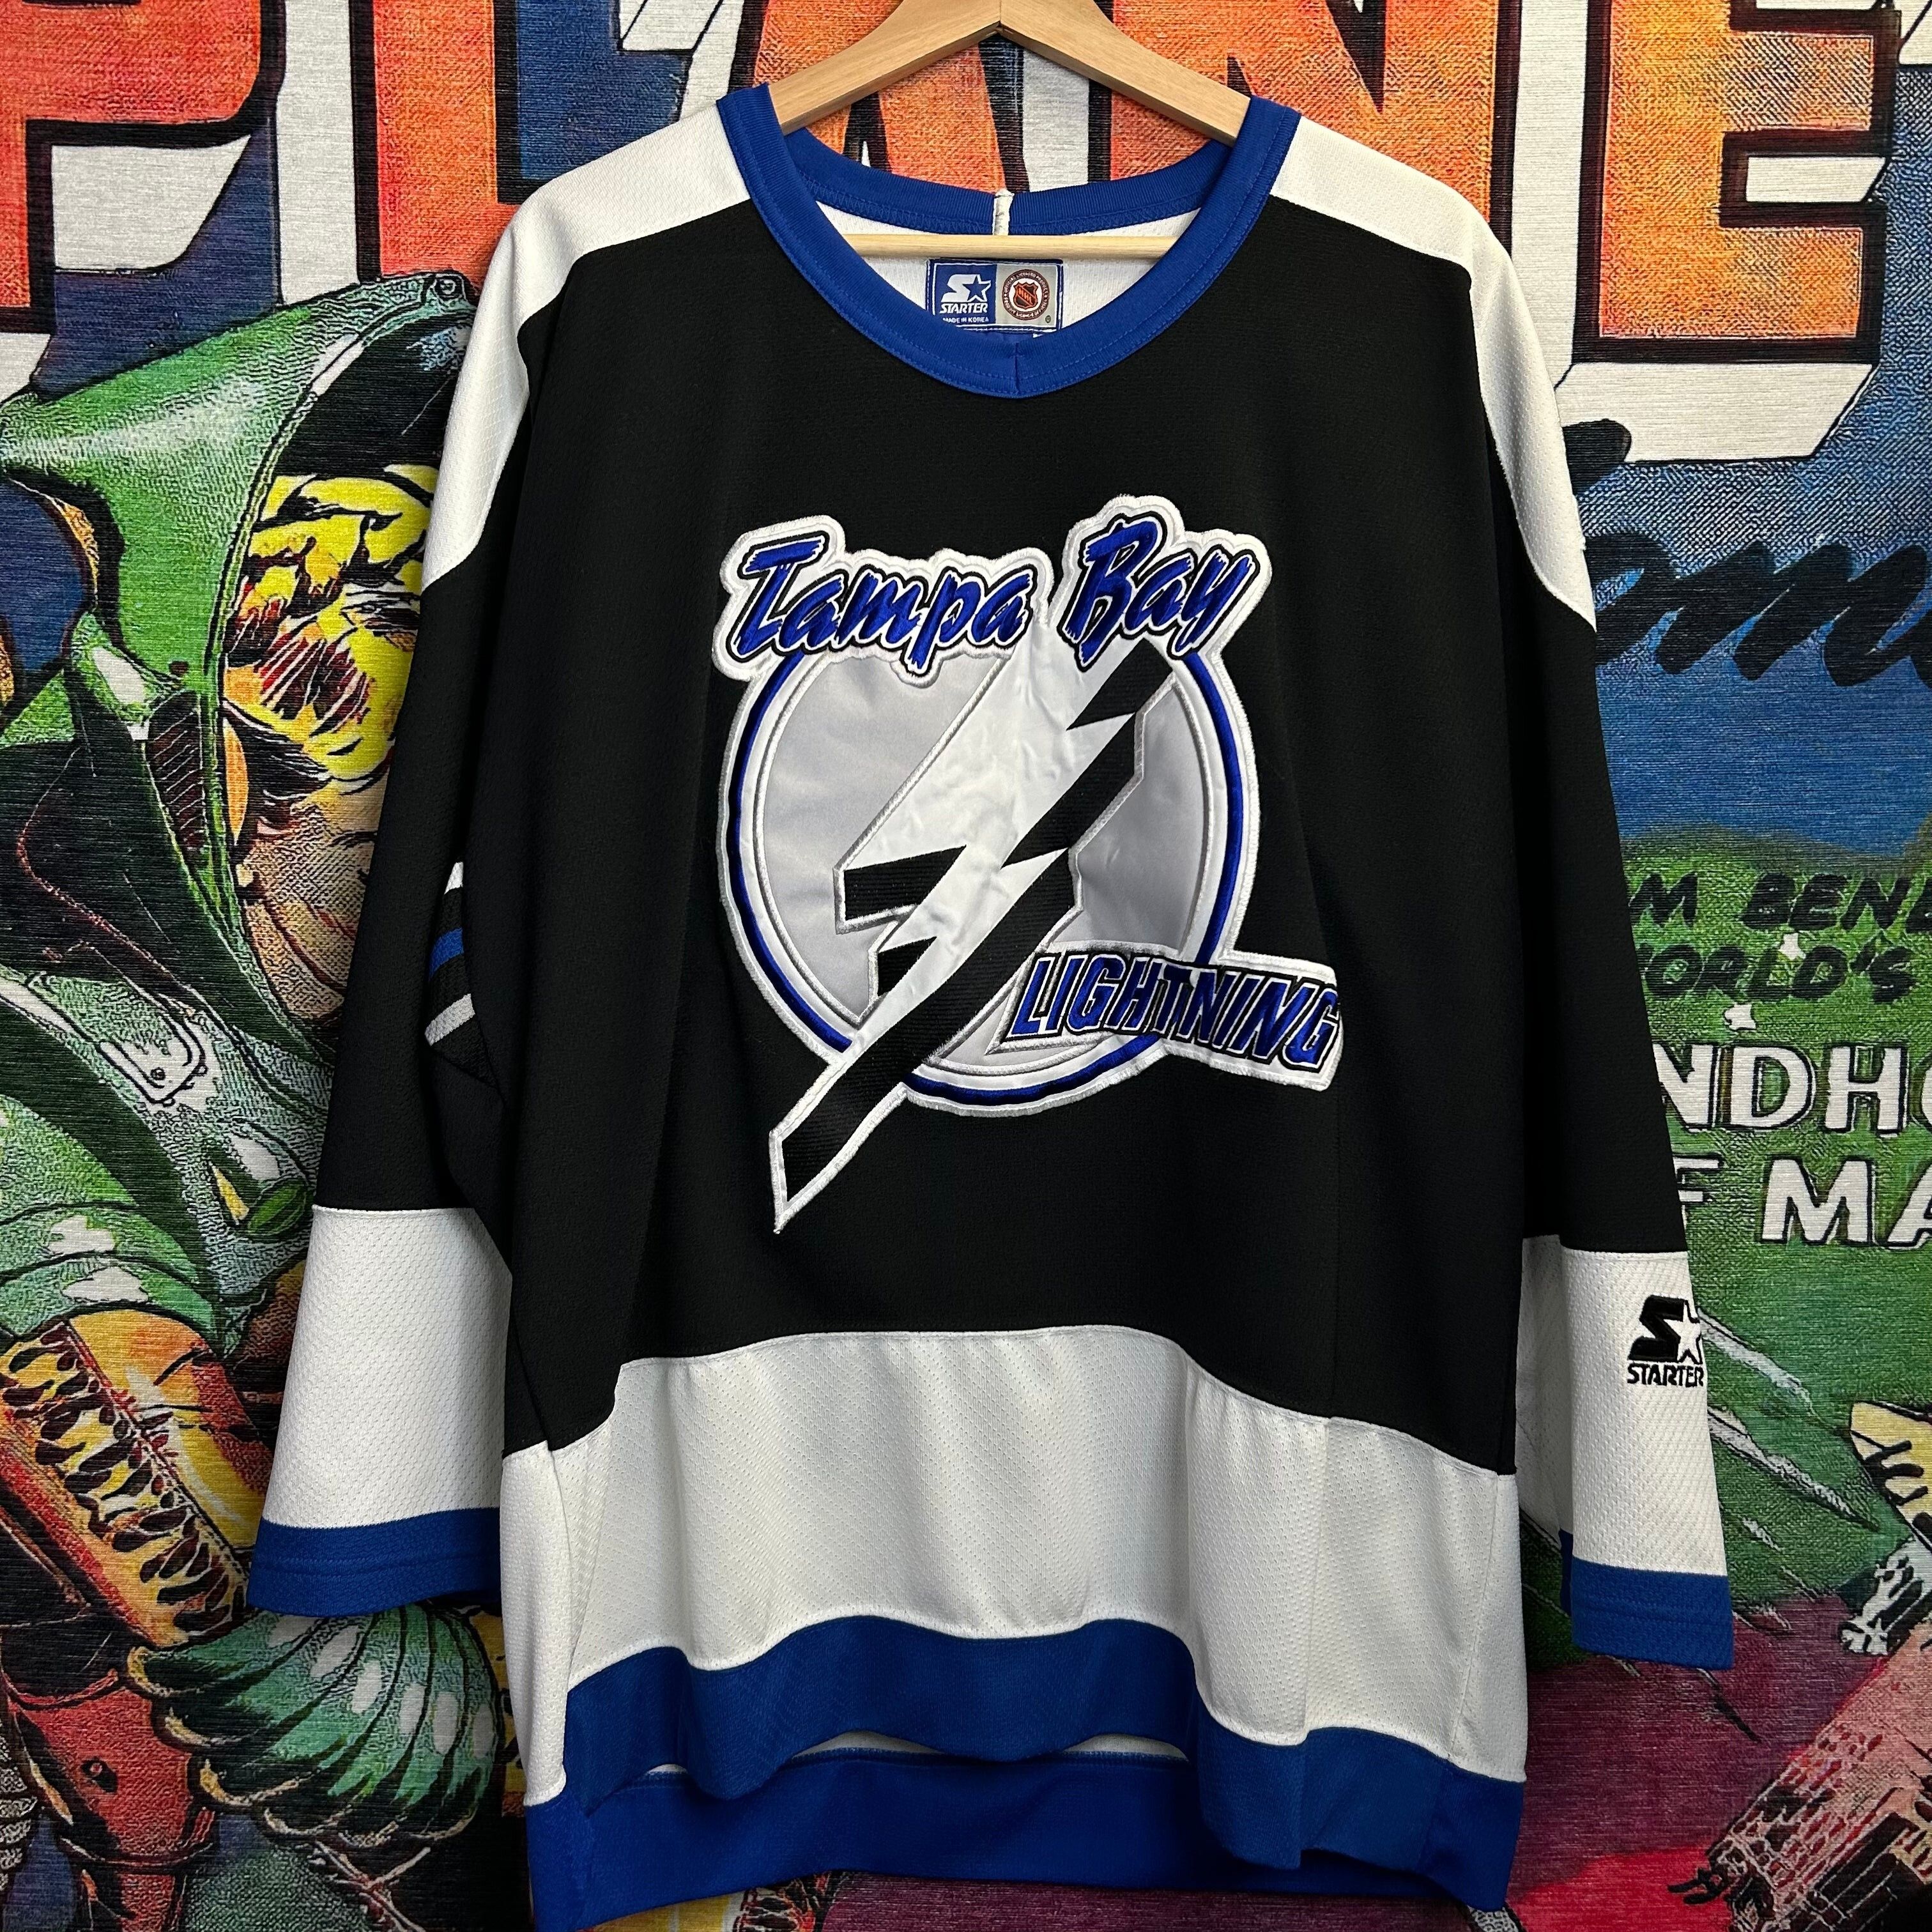 Vintage Vintage 90’s Tampa Bay Lightning NHL Hockey Jersey Size M Size US M / EU 48-50 / 2 - 1 Preview